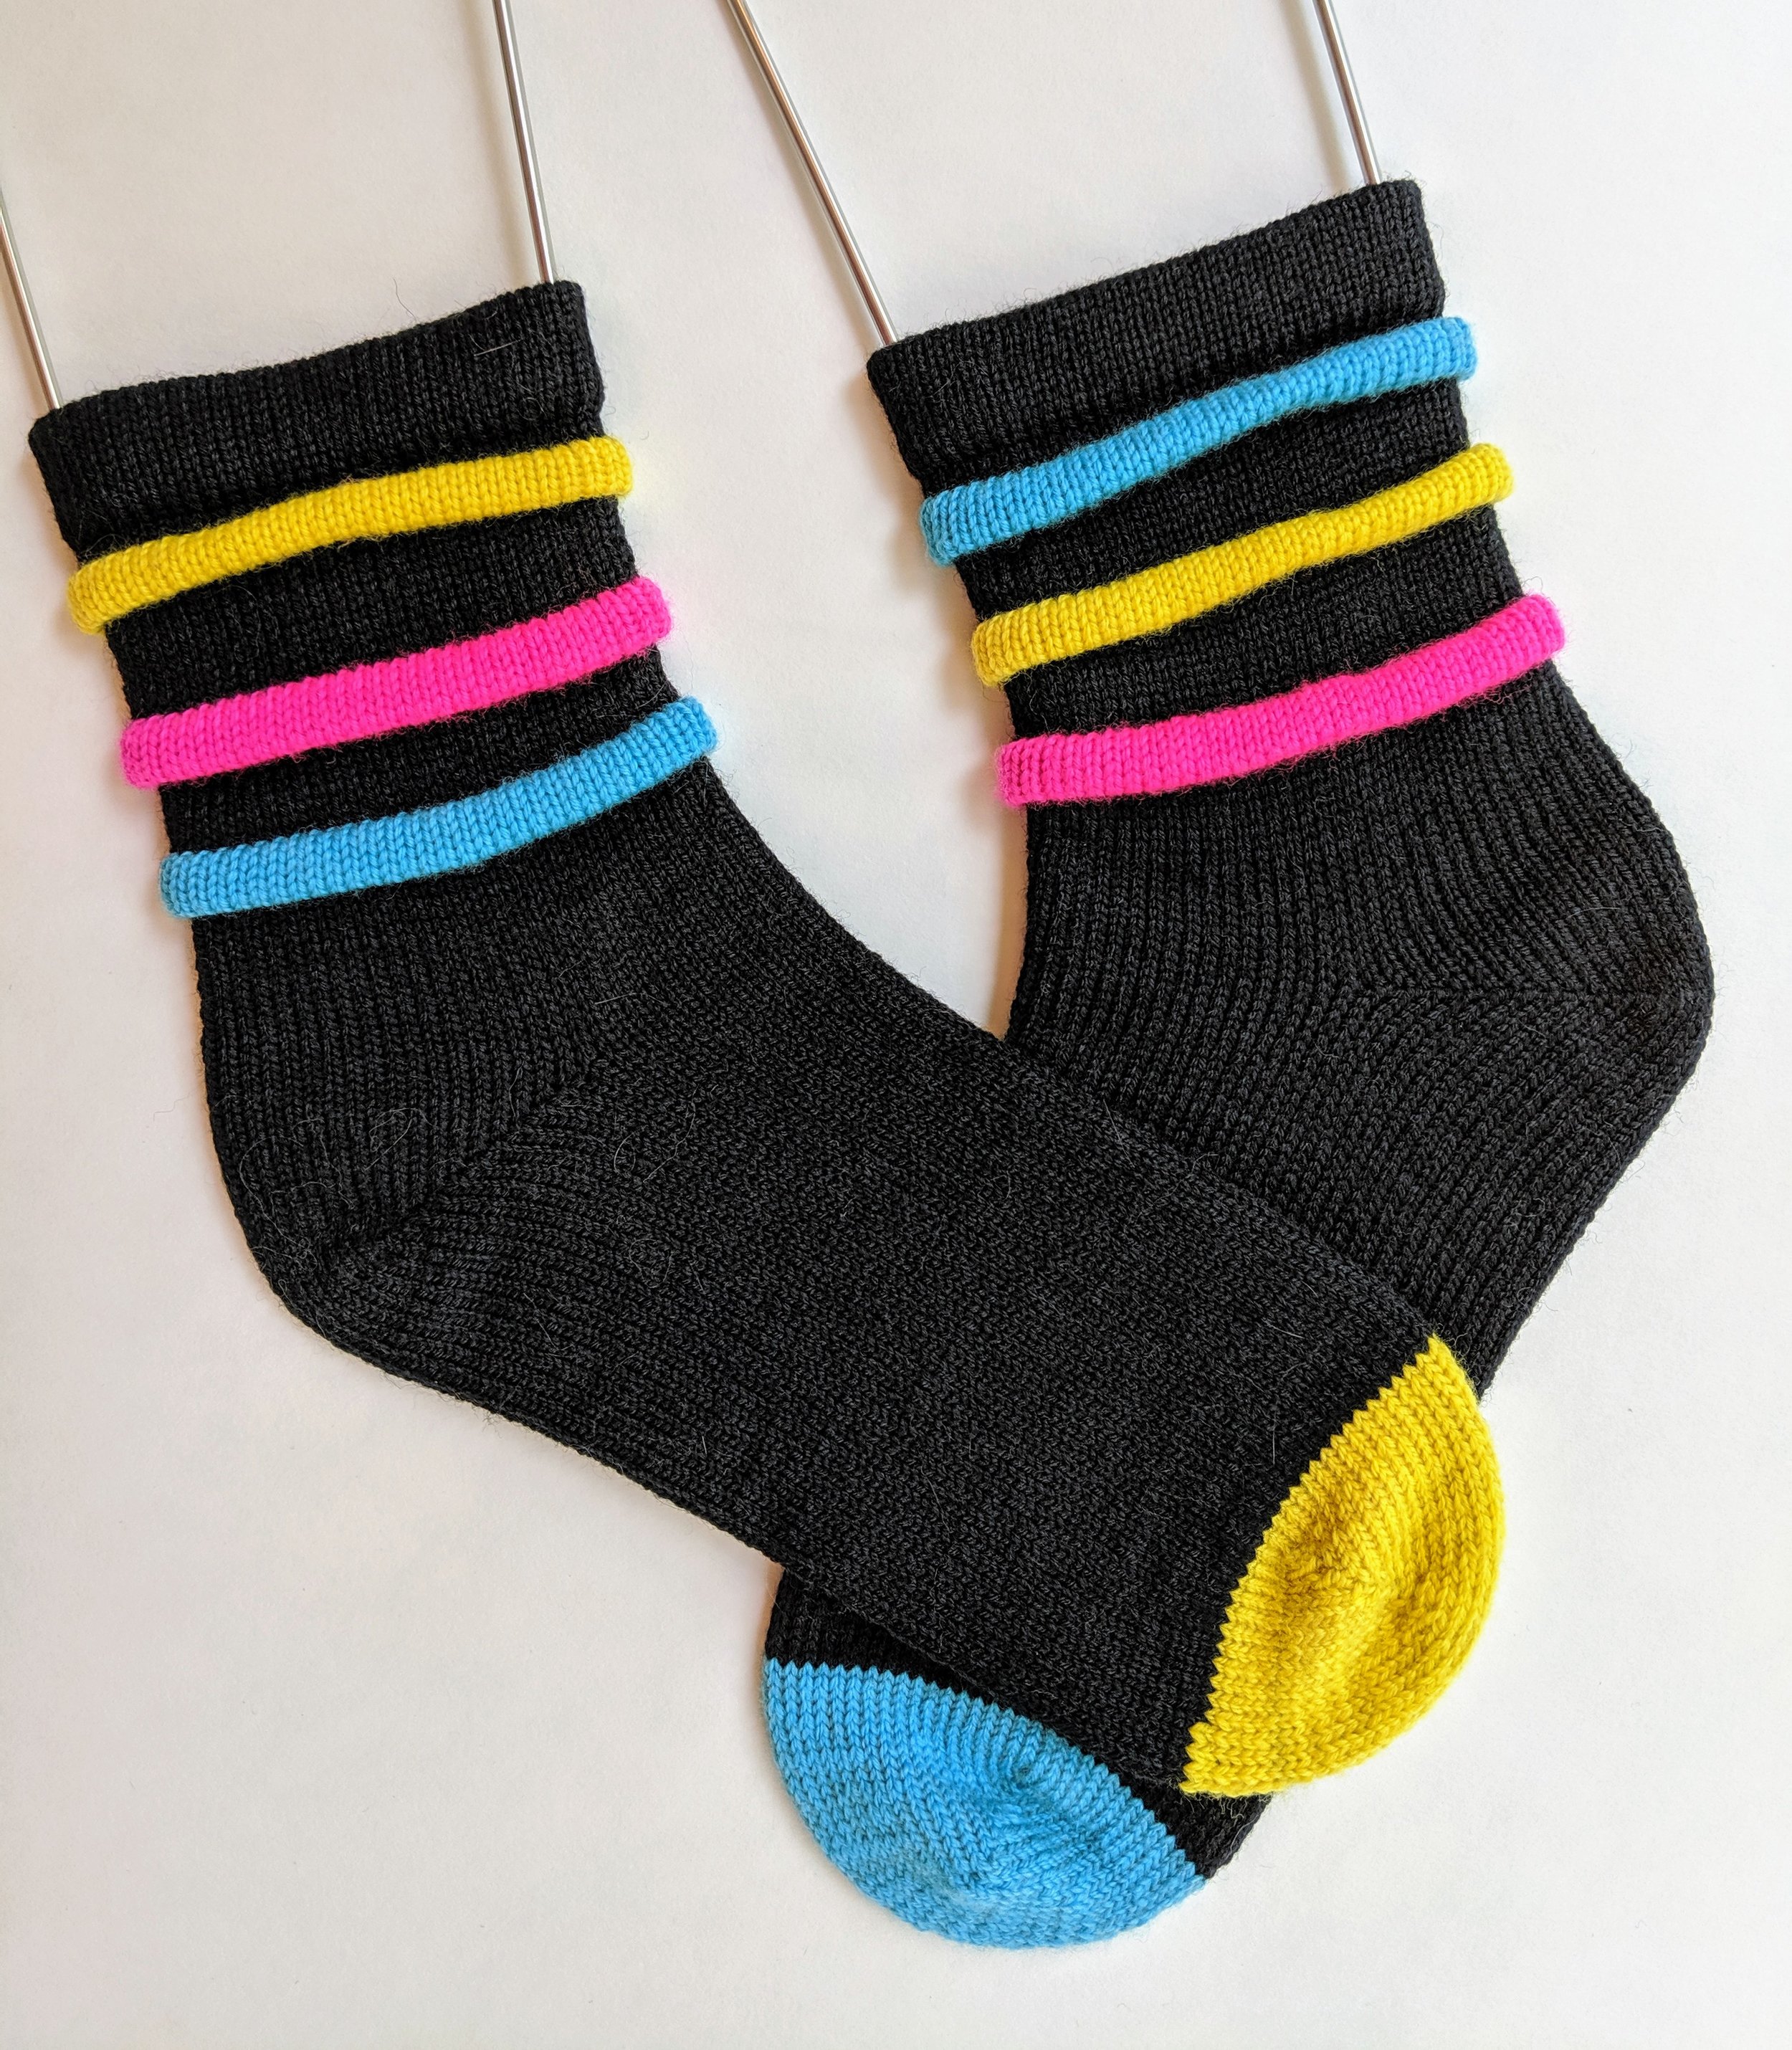 3 ring circus socks; wool and nylon